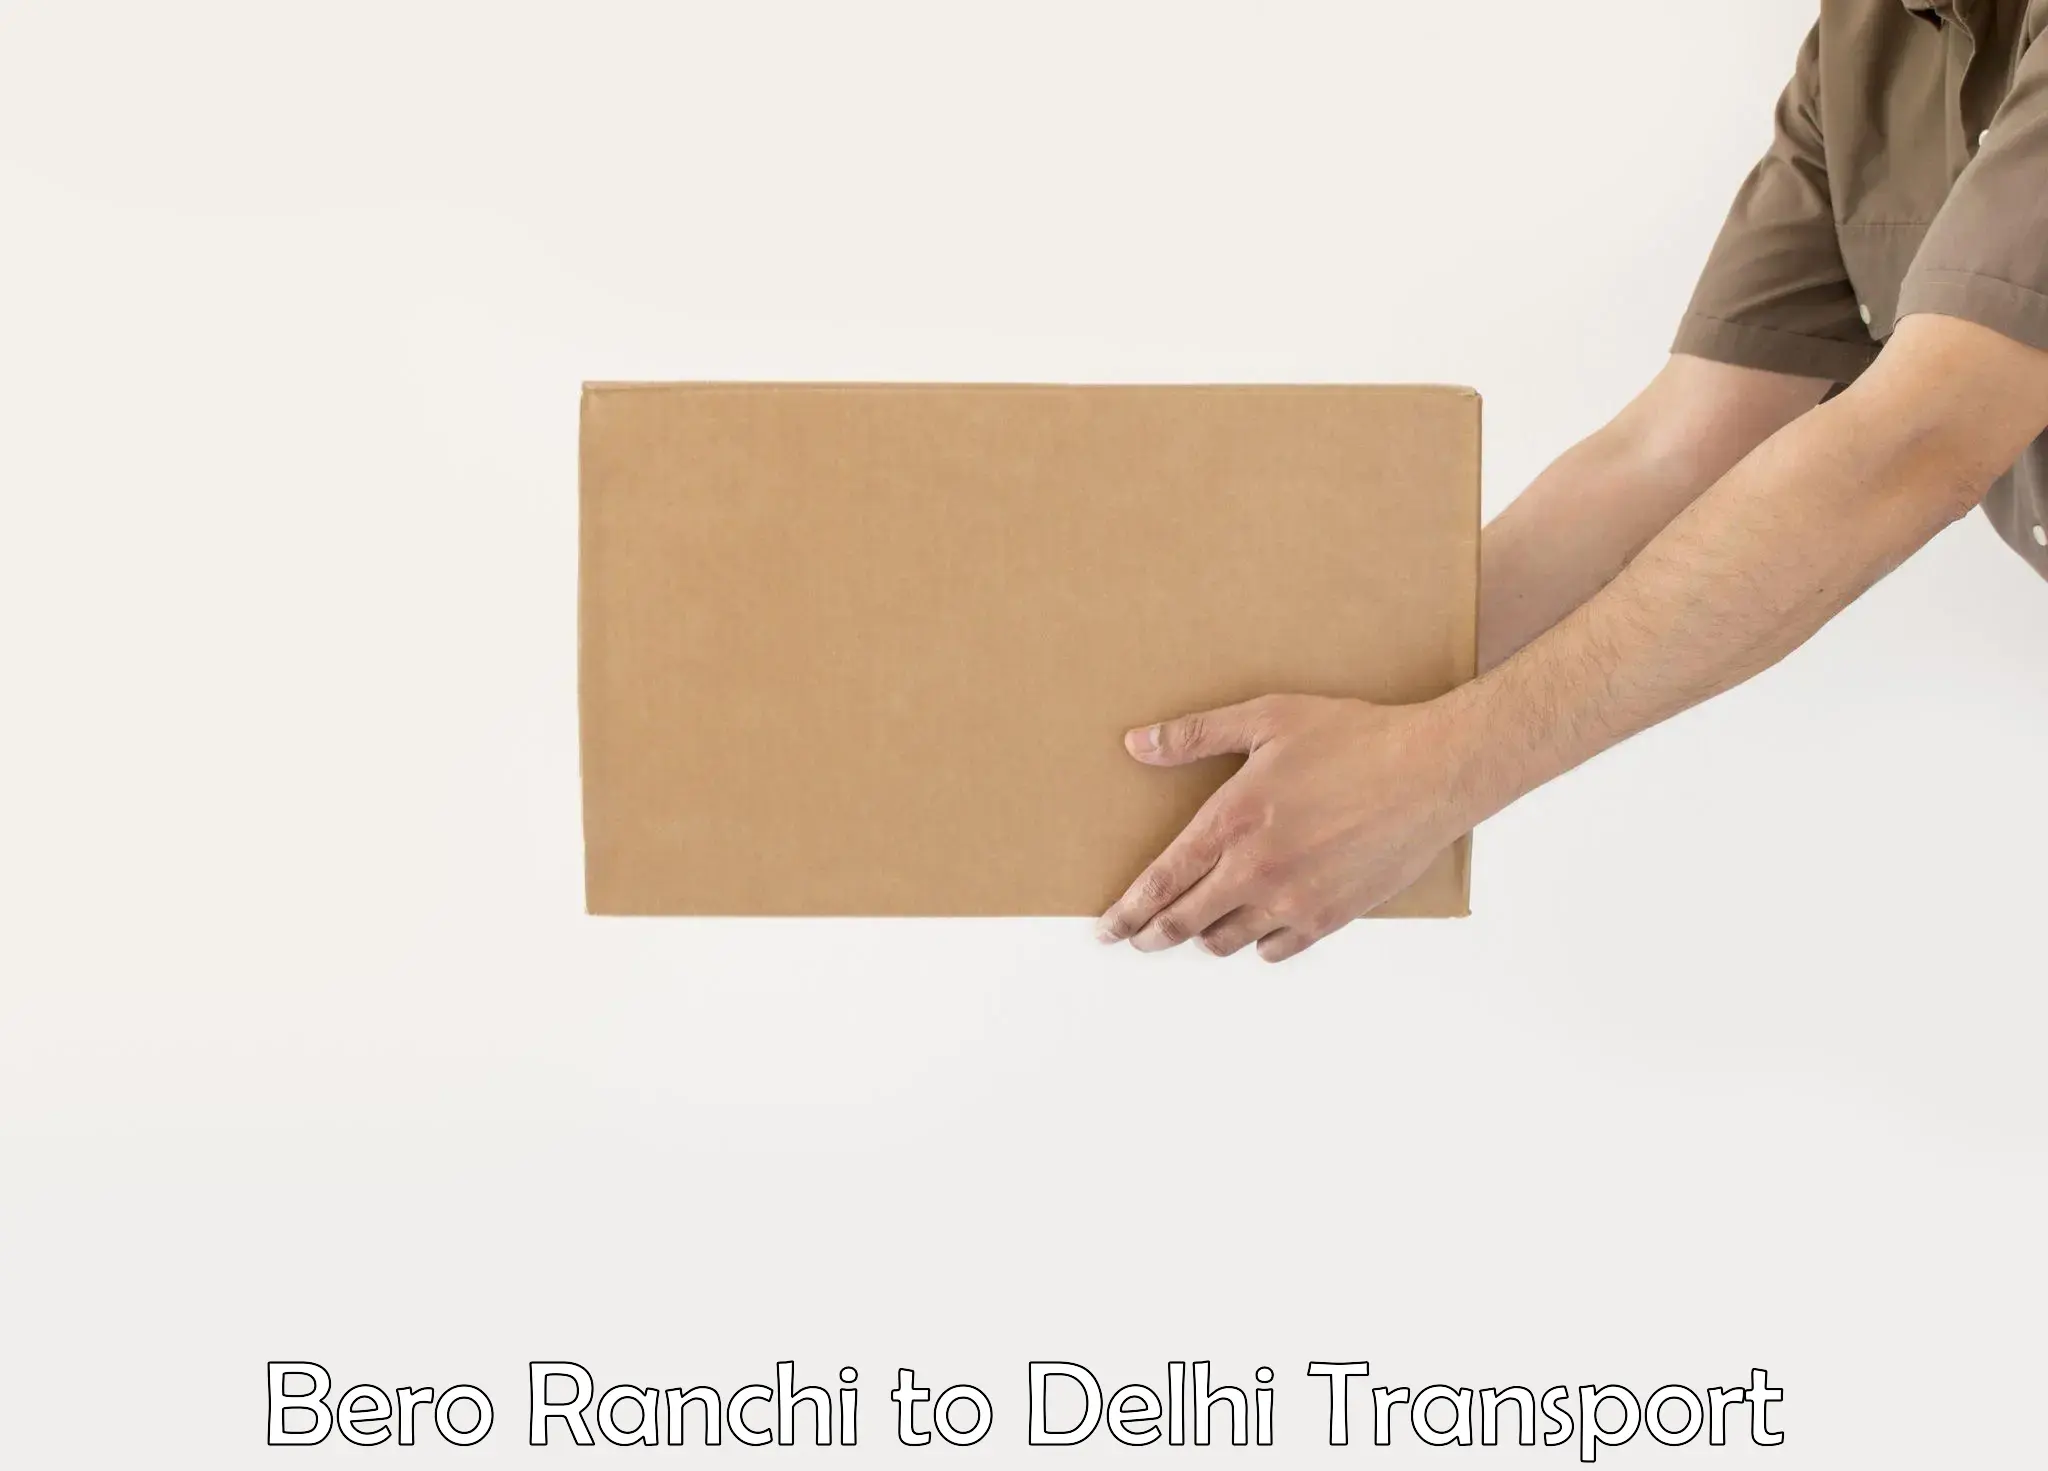 Daily transport service Bero Ranchi to Delhi